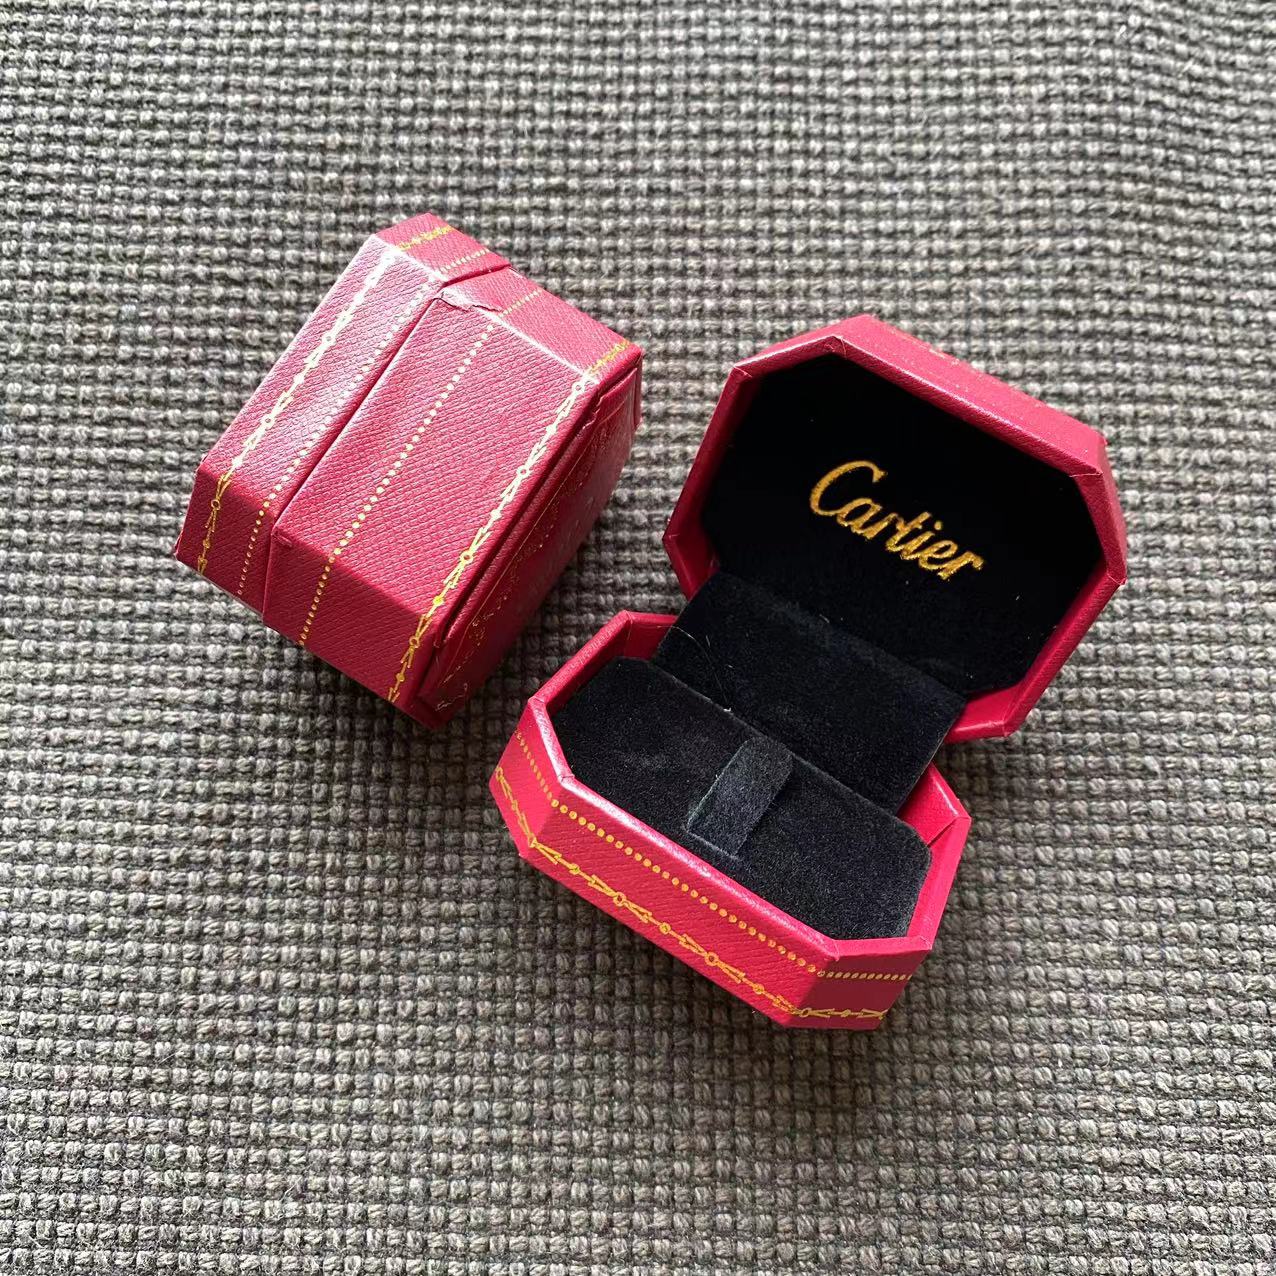 Cartier Ring jewelry box 1 pcs